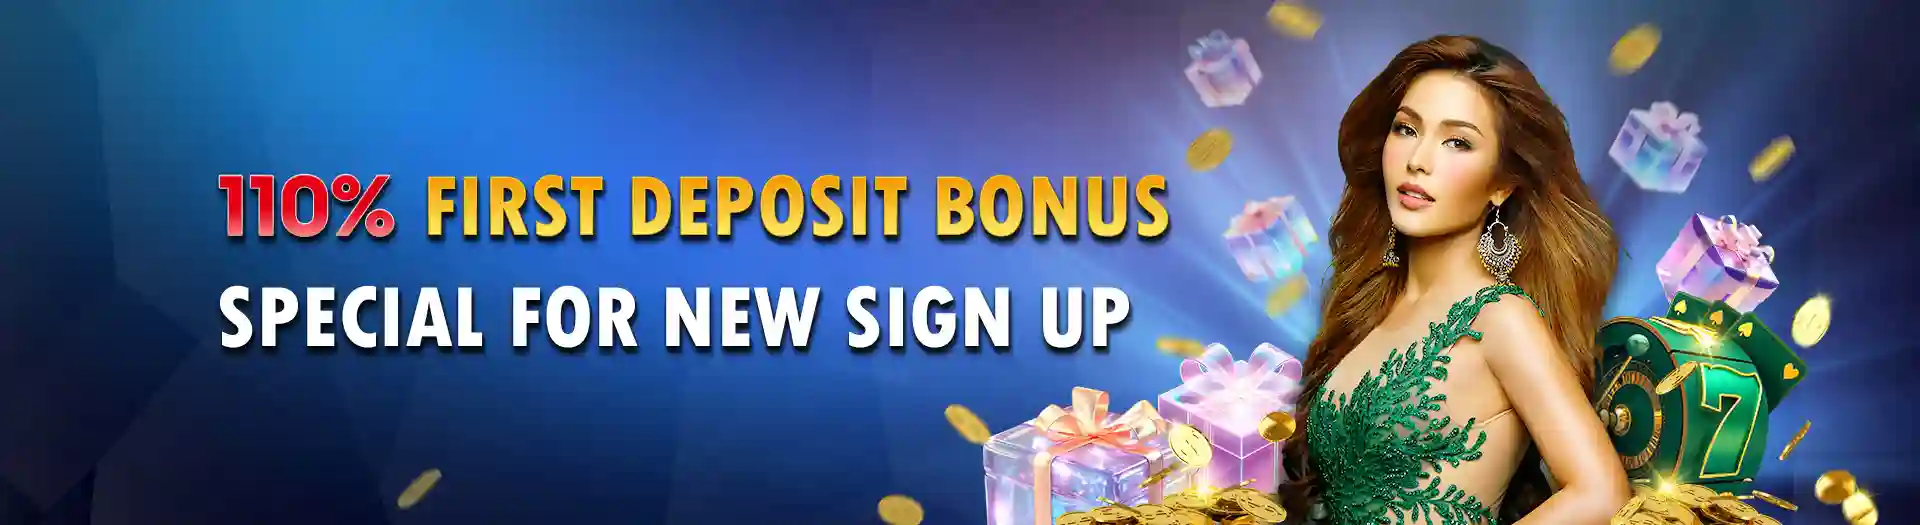 110% First Deposit Bonus